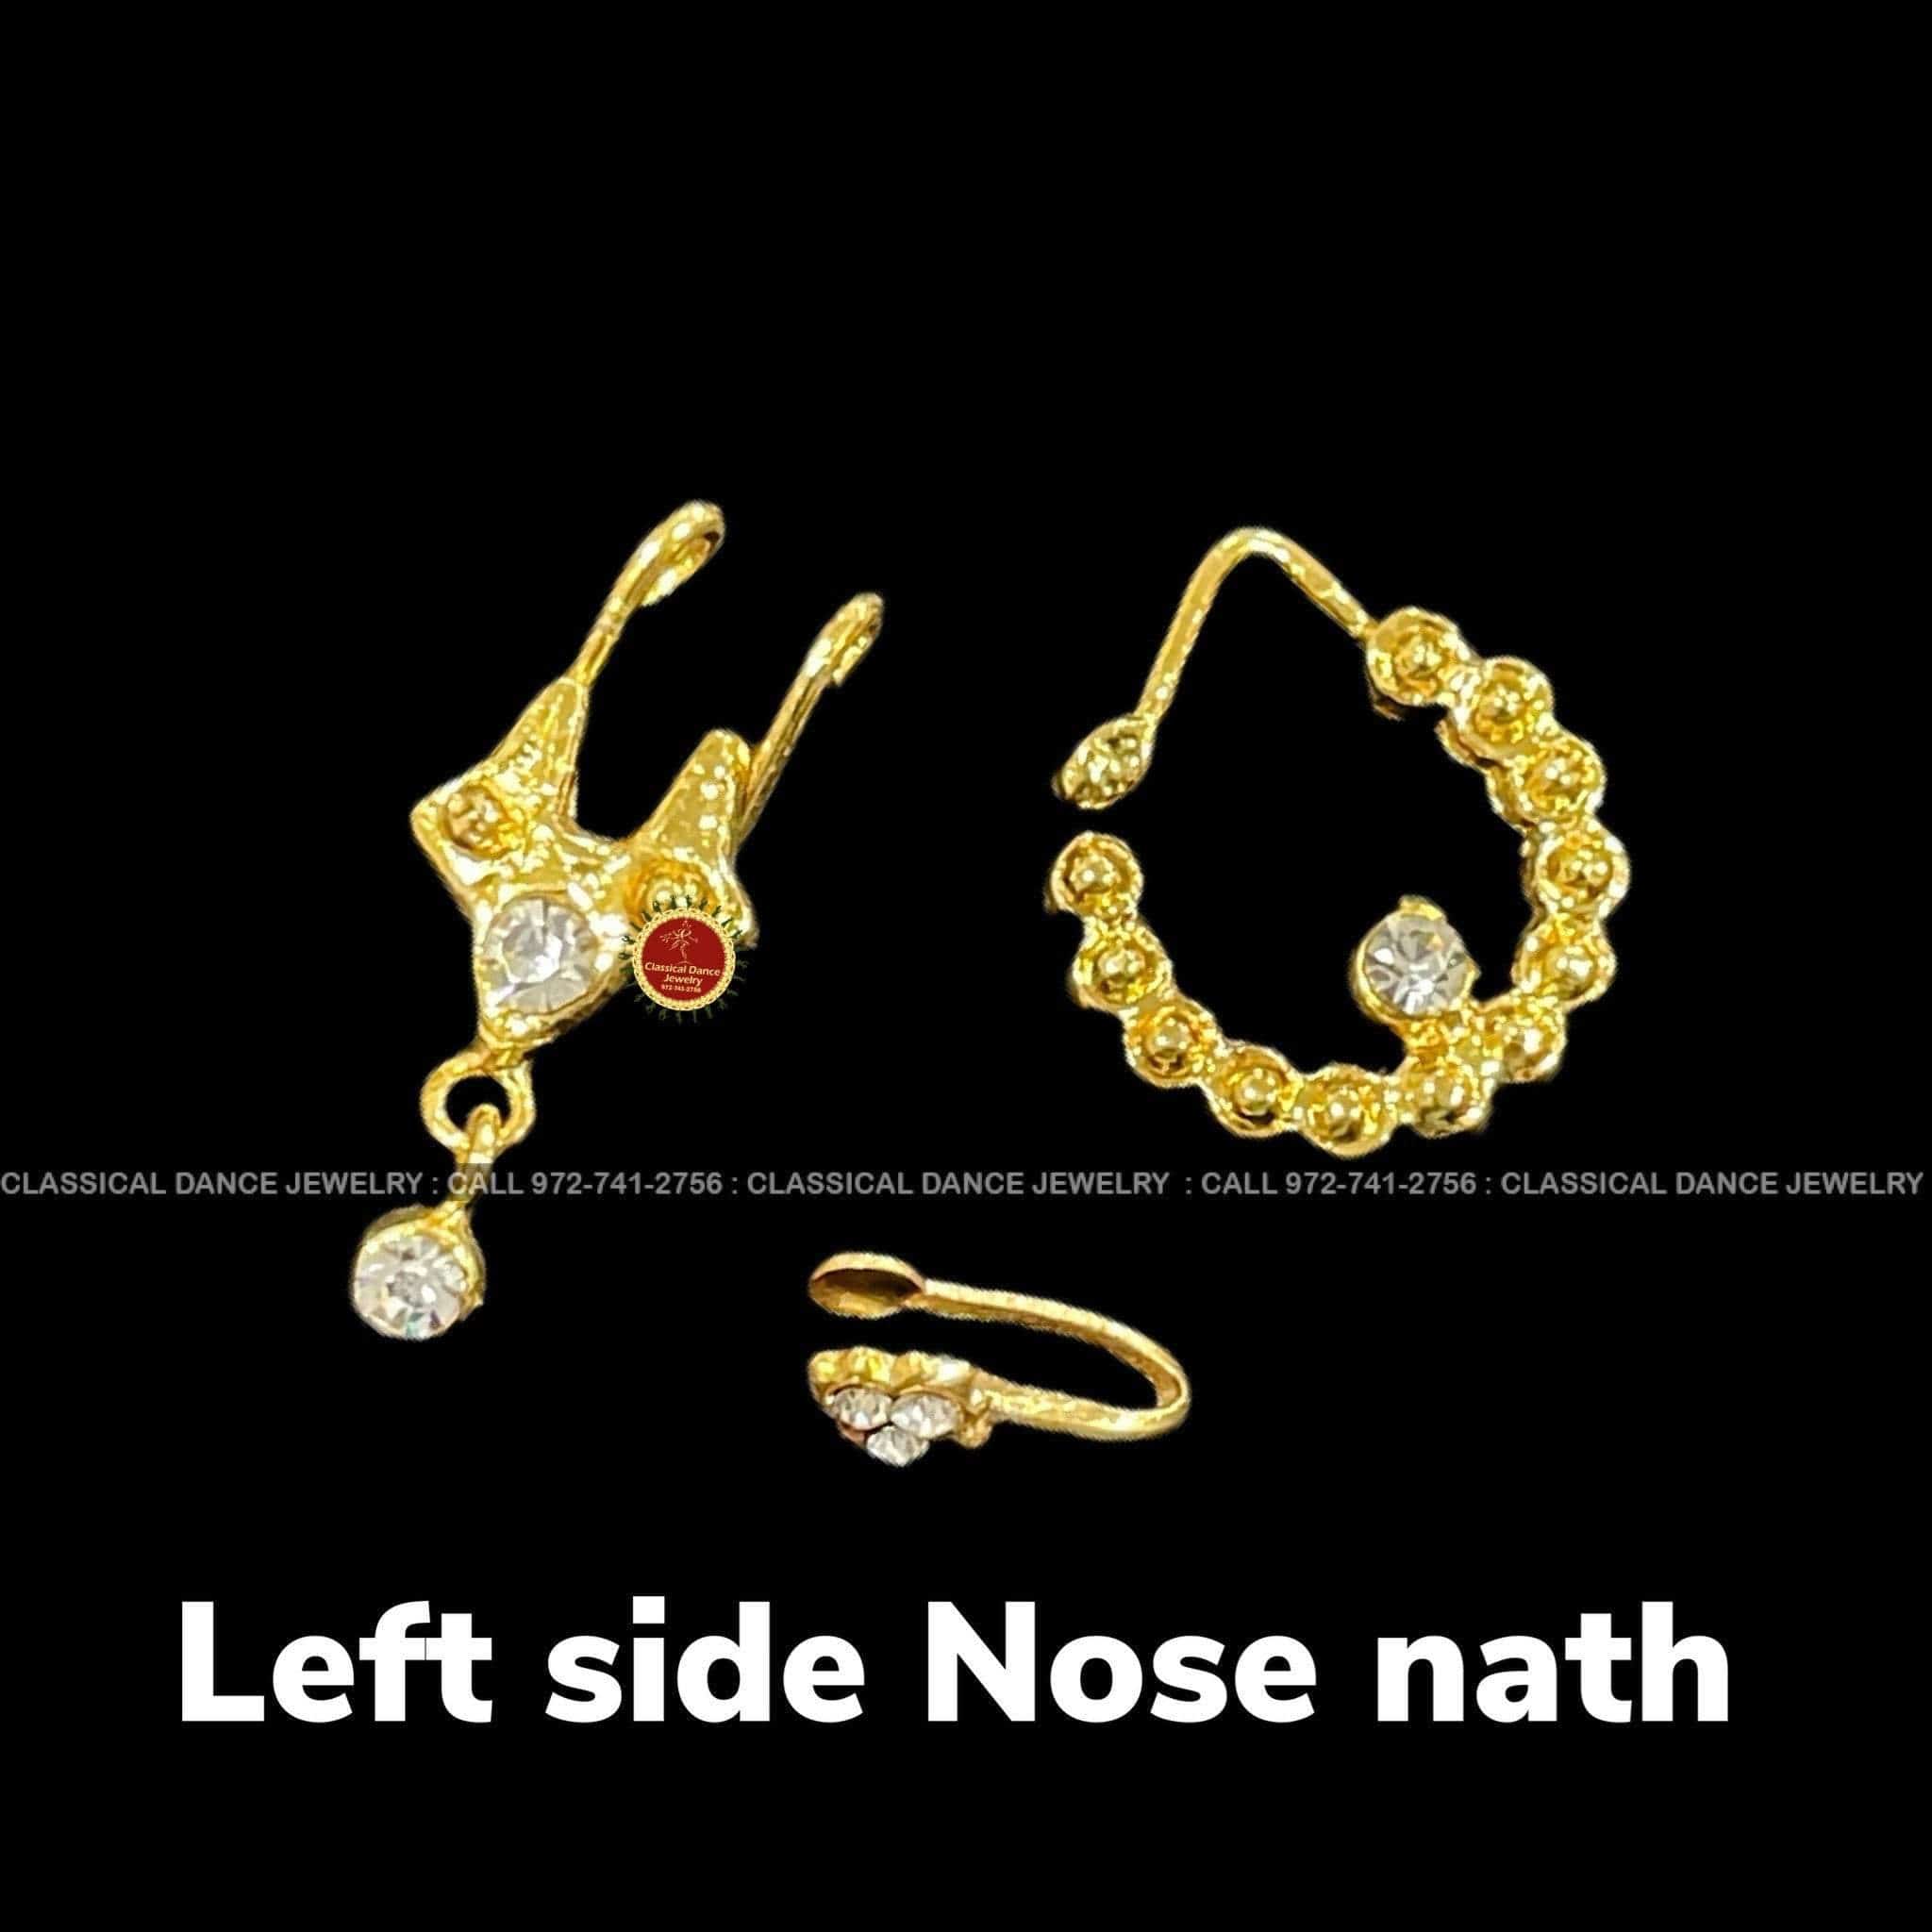 Manisha Jewellery Nose Pin Combo